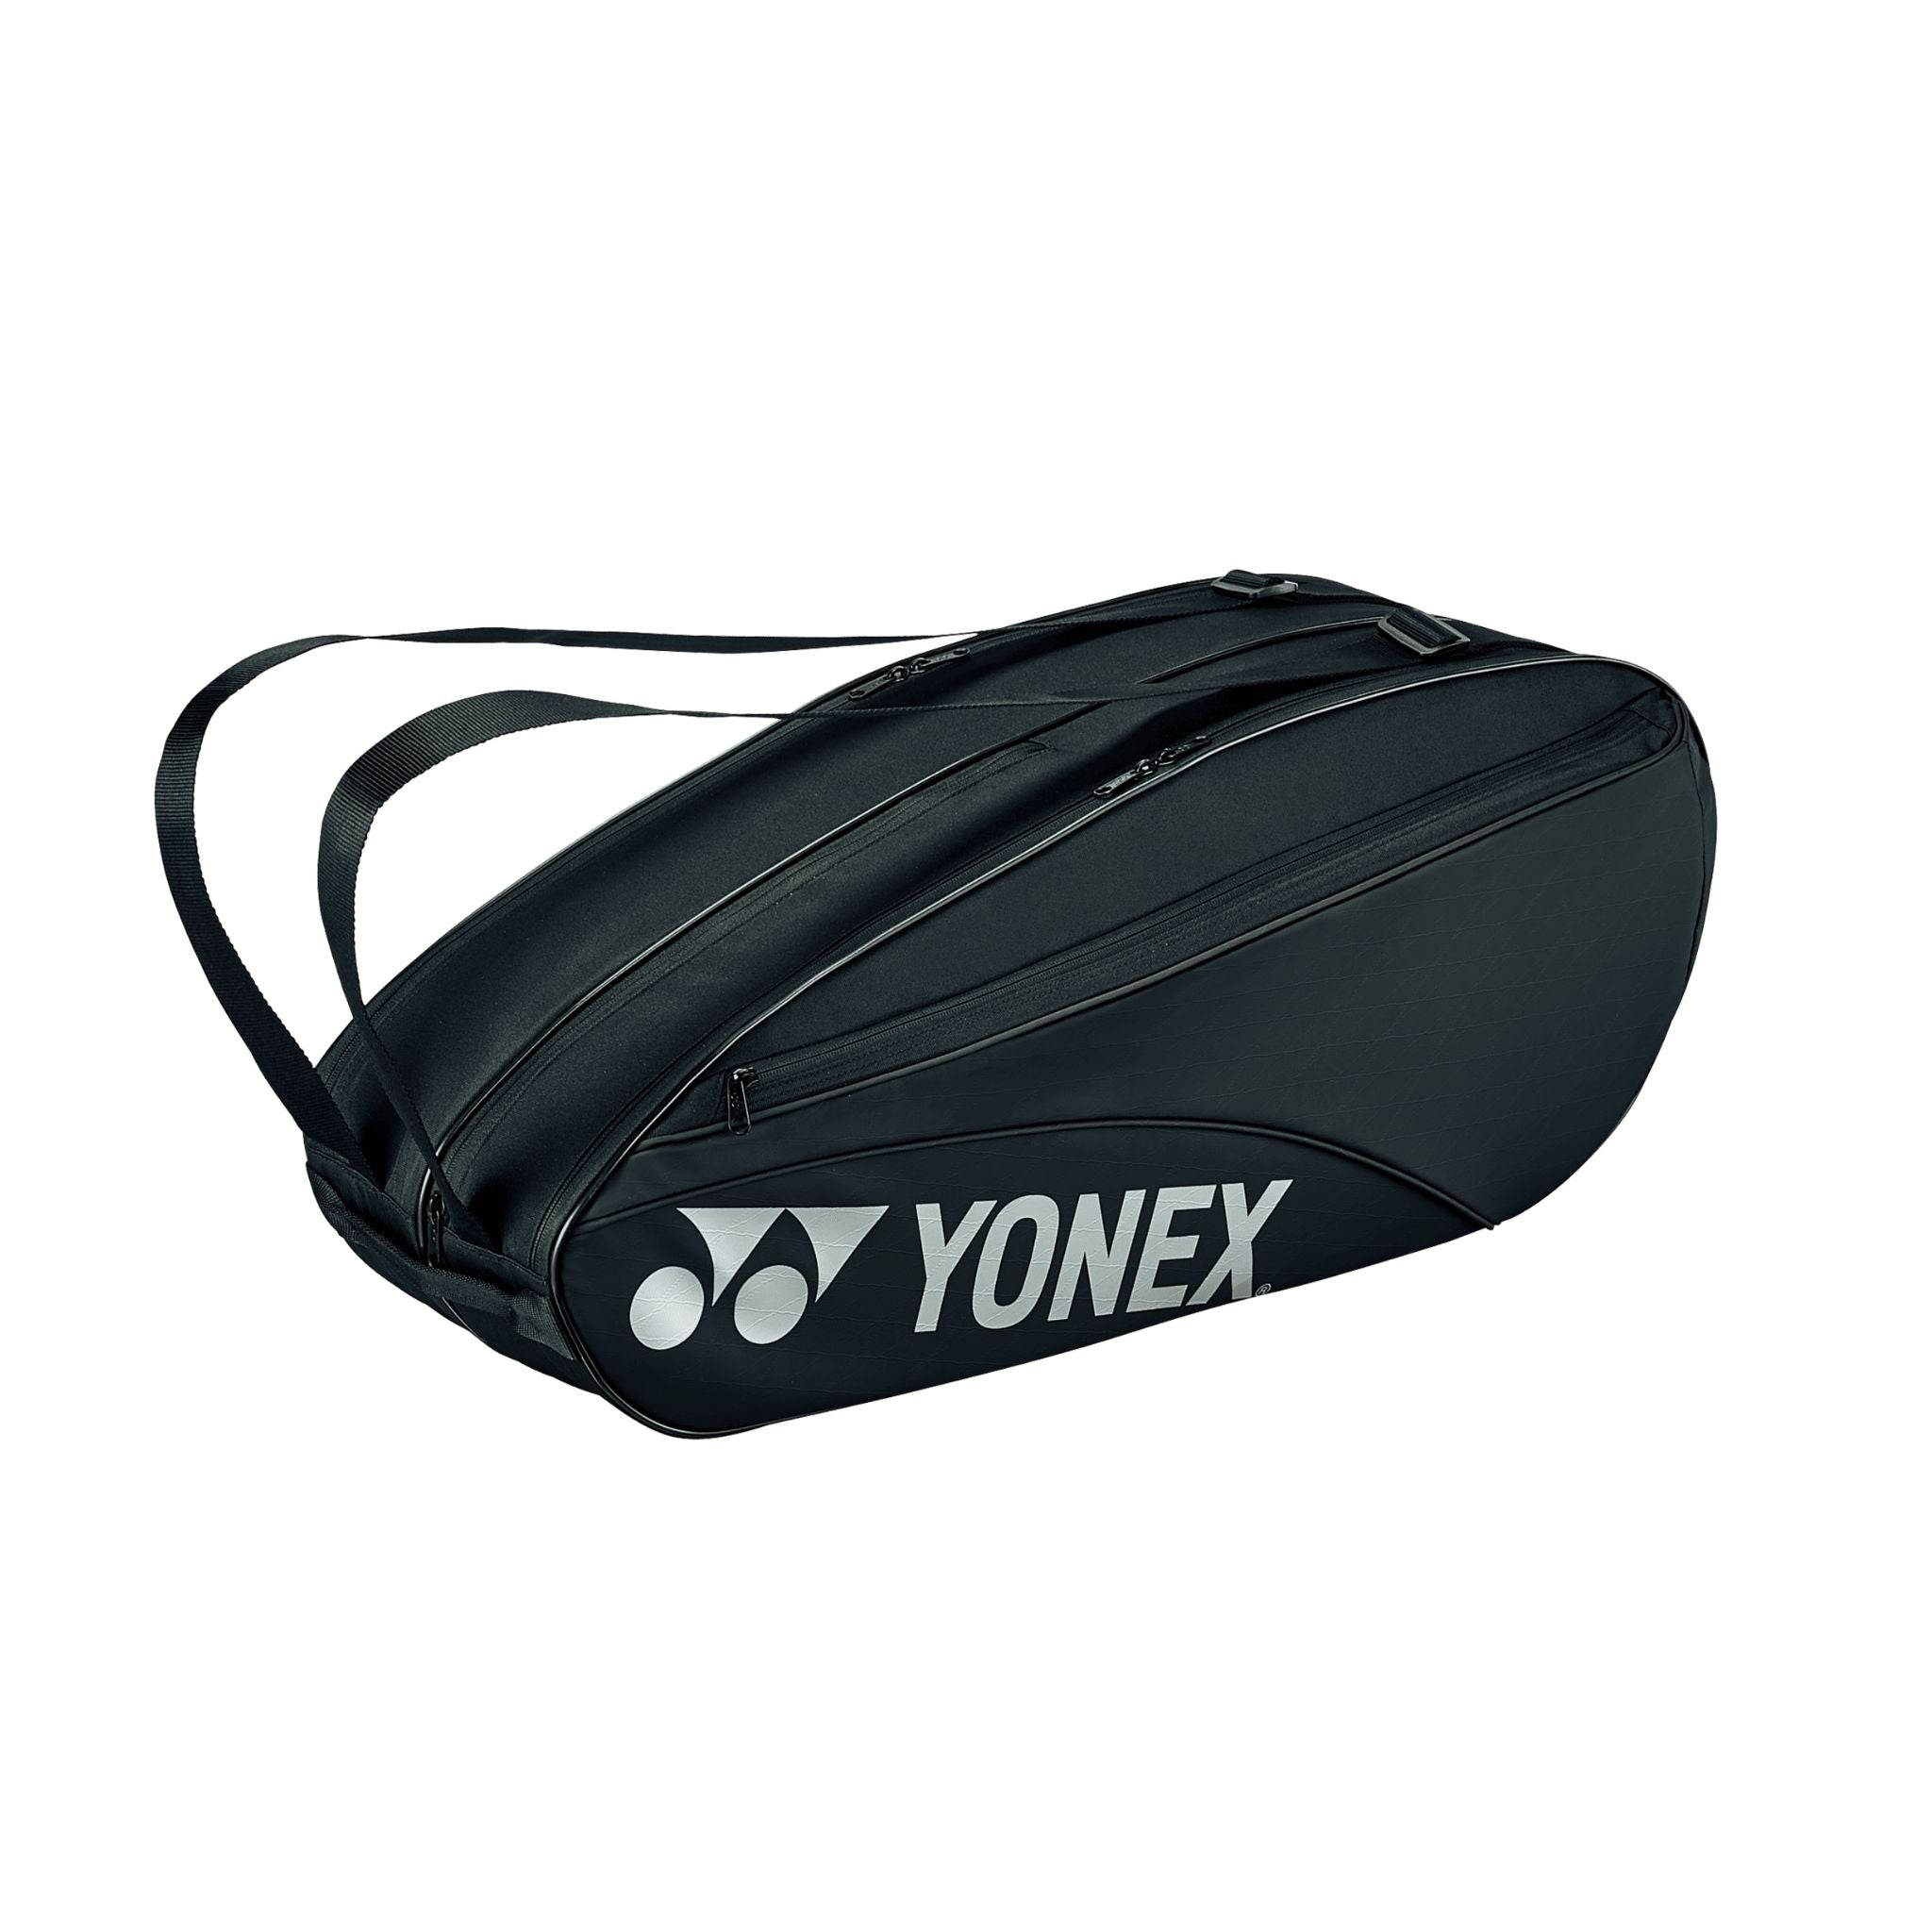 New 2022 Yonex Bags | Talk Tennis